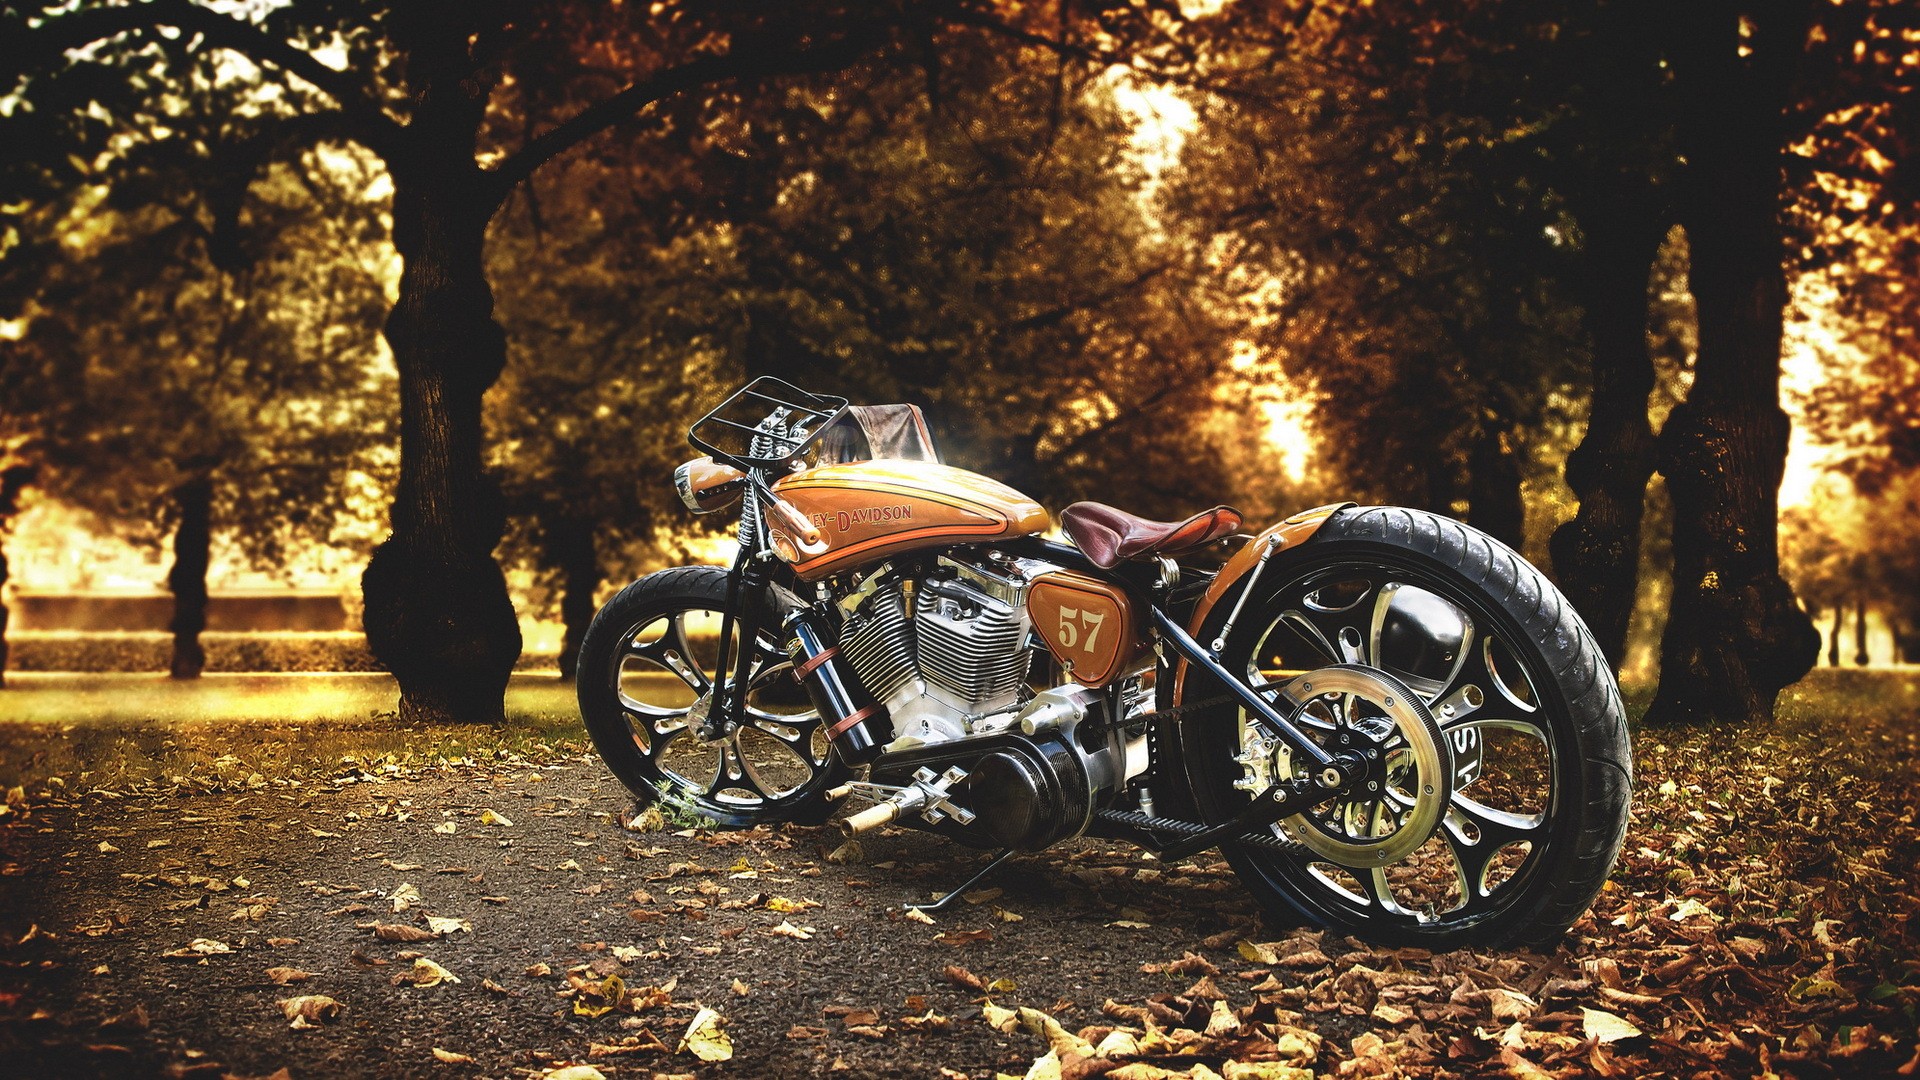 Harley Davidson Motorcycle, HD Bikes, 4k Wallpapers, Images ...